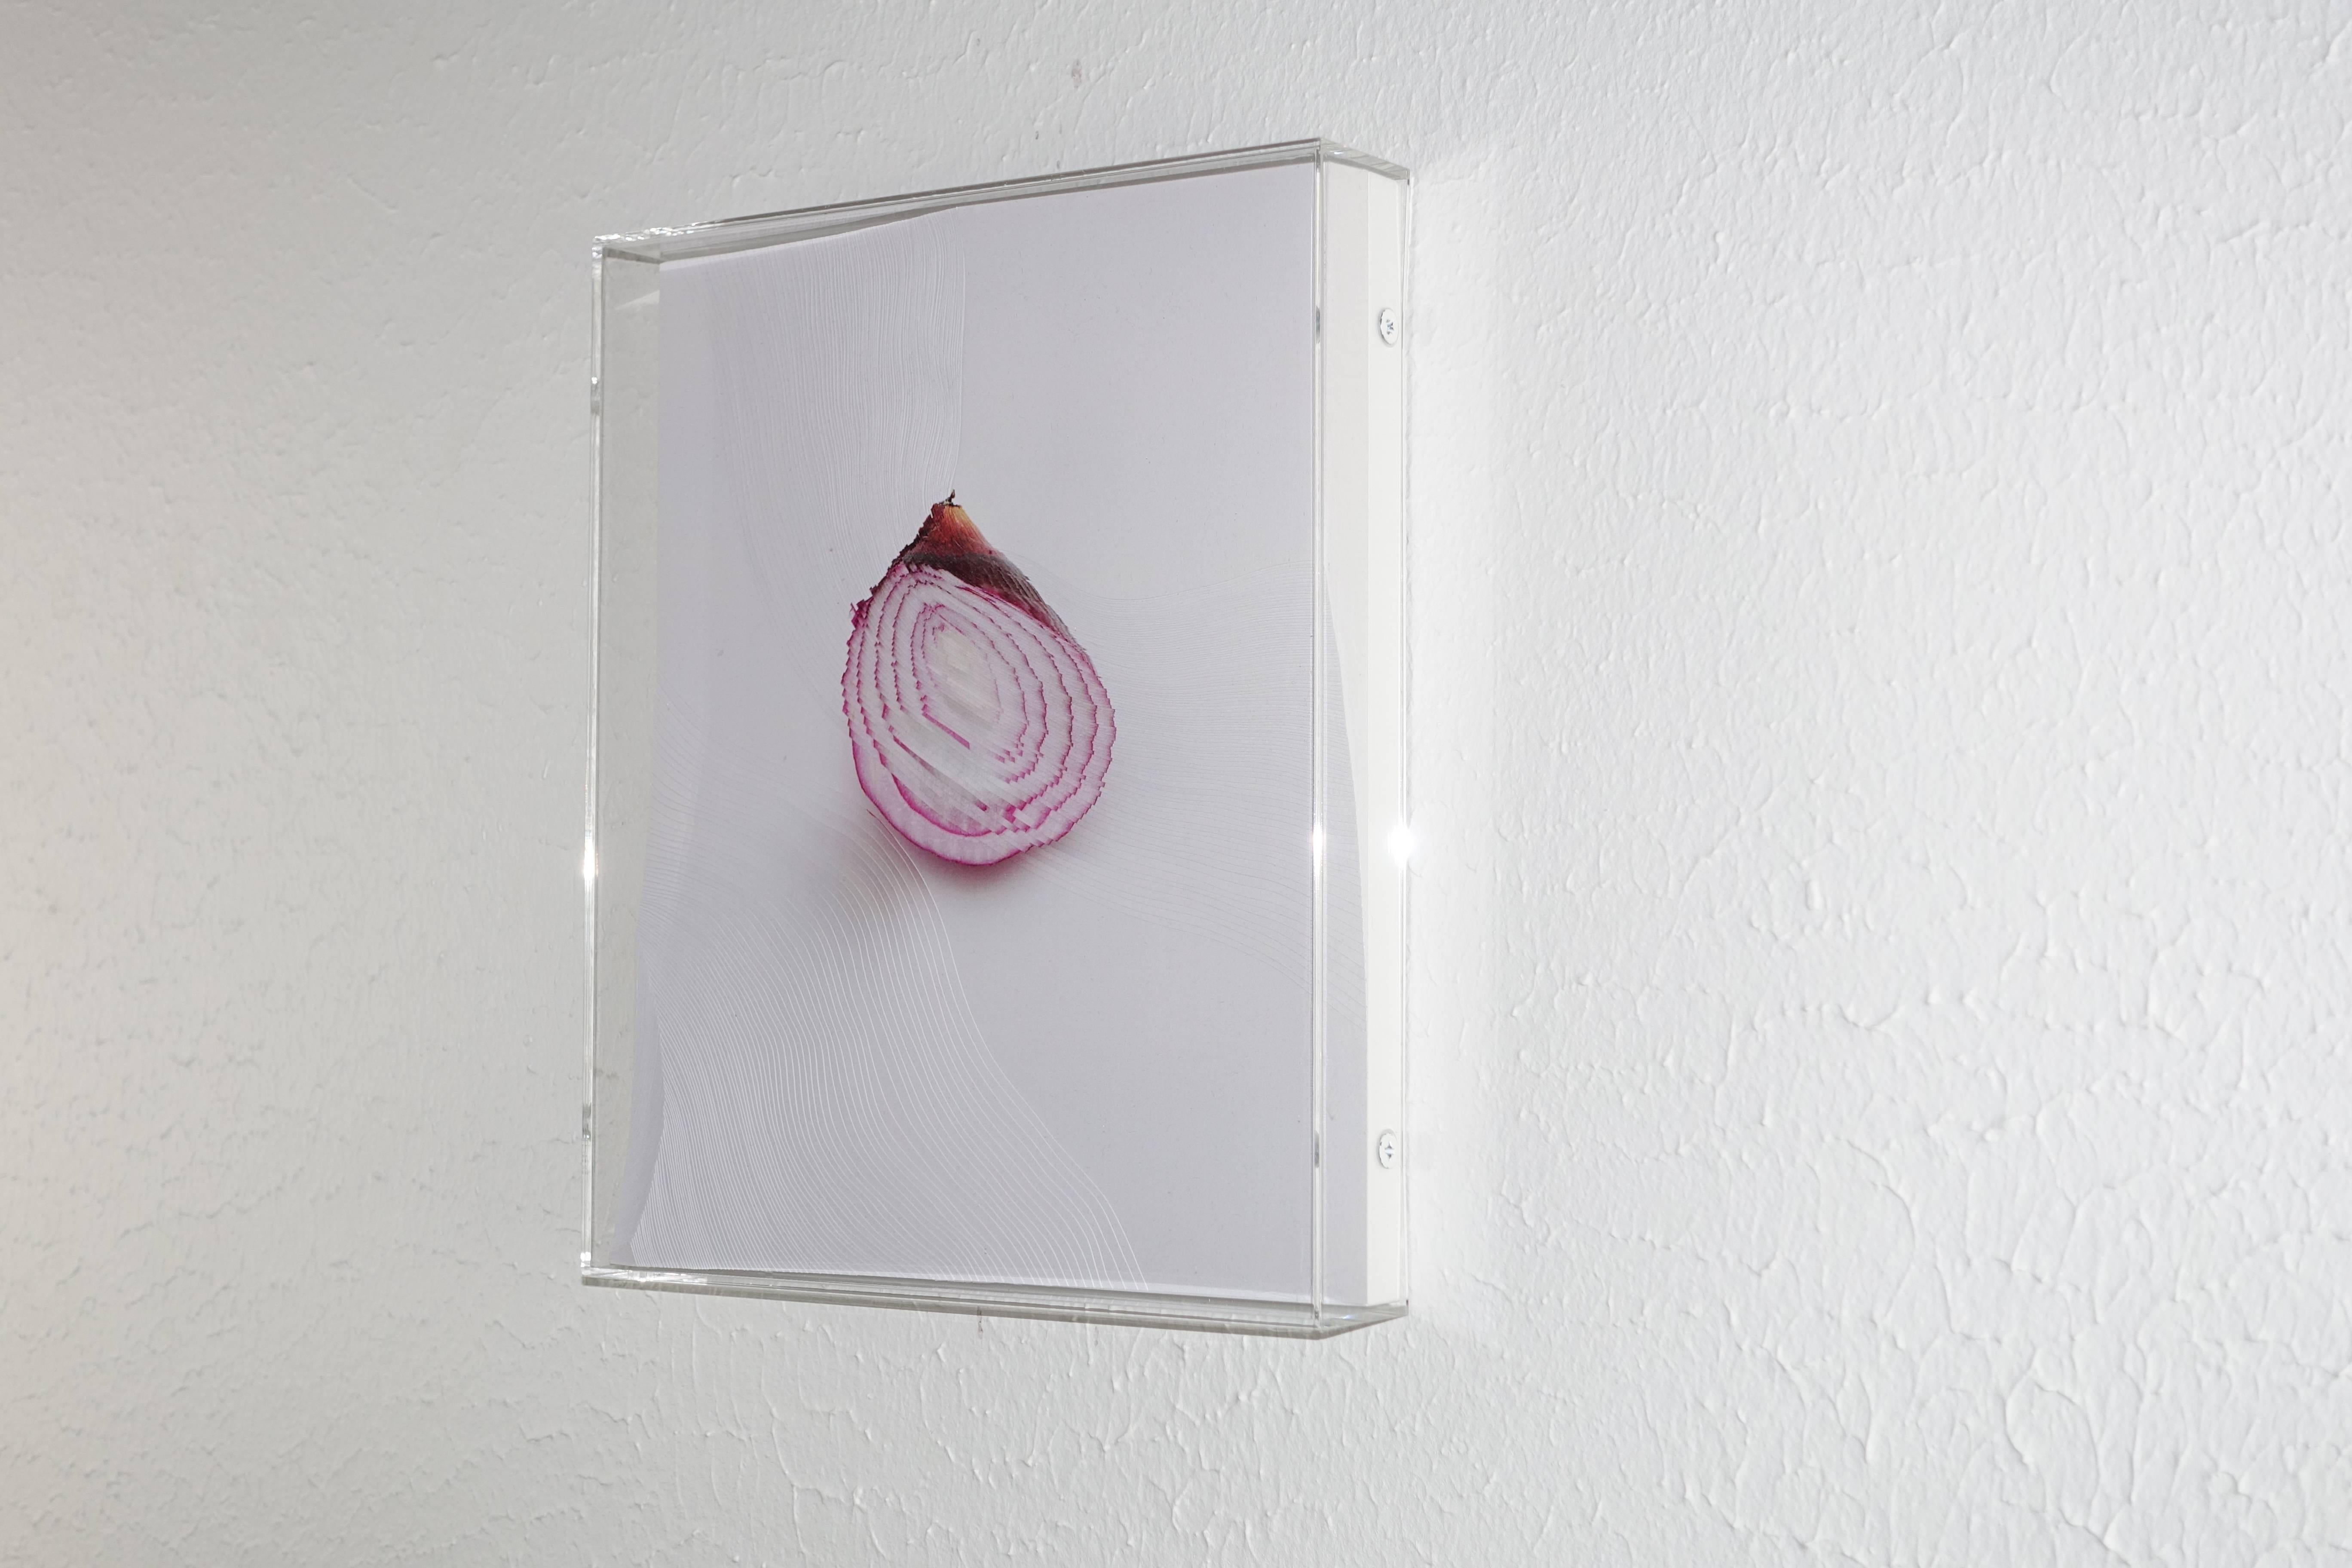 Nerhol Still-Life Sculpture - "Slicing the Onion No. 002" Series 6 of 6: 3-D engraved wall sculpture